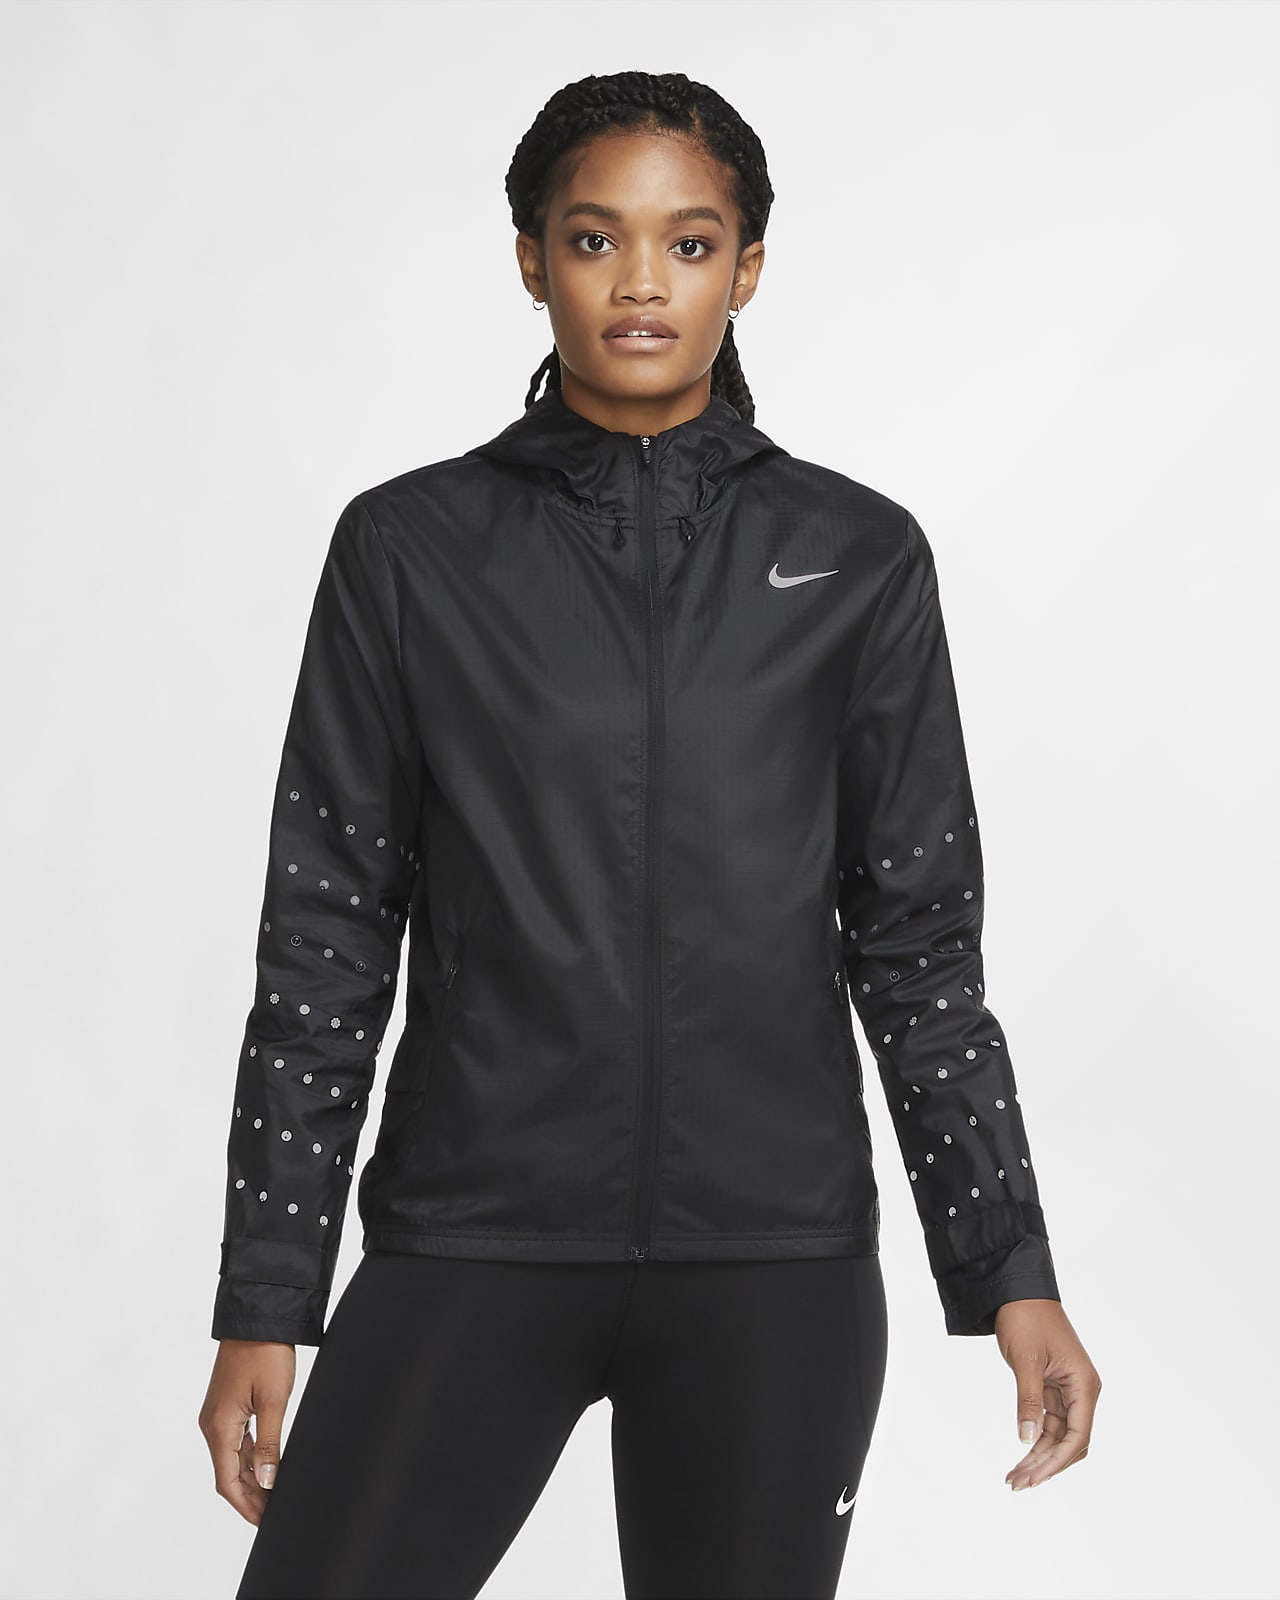 Hooded Running Jacket. Nike LU